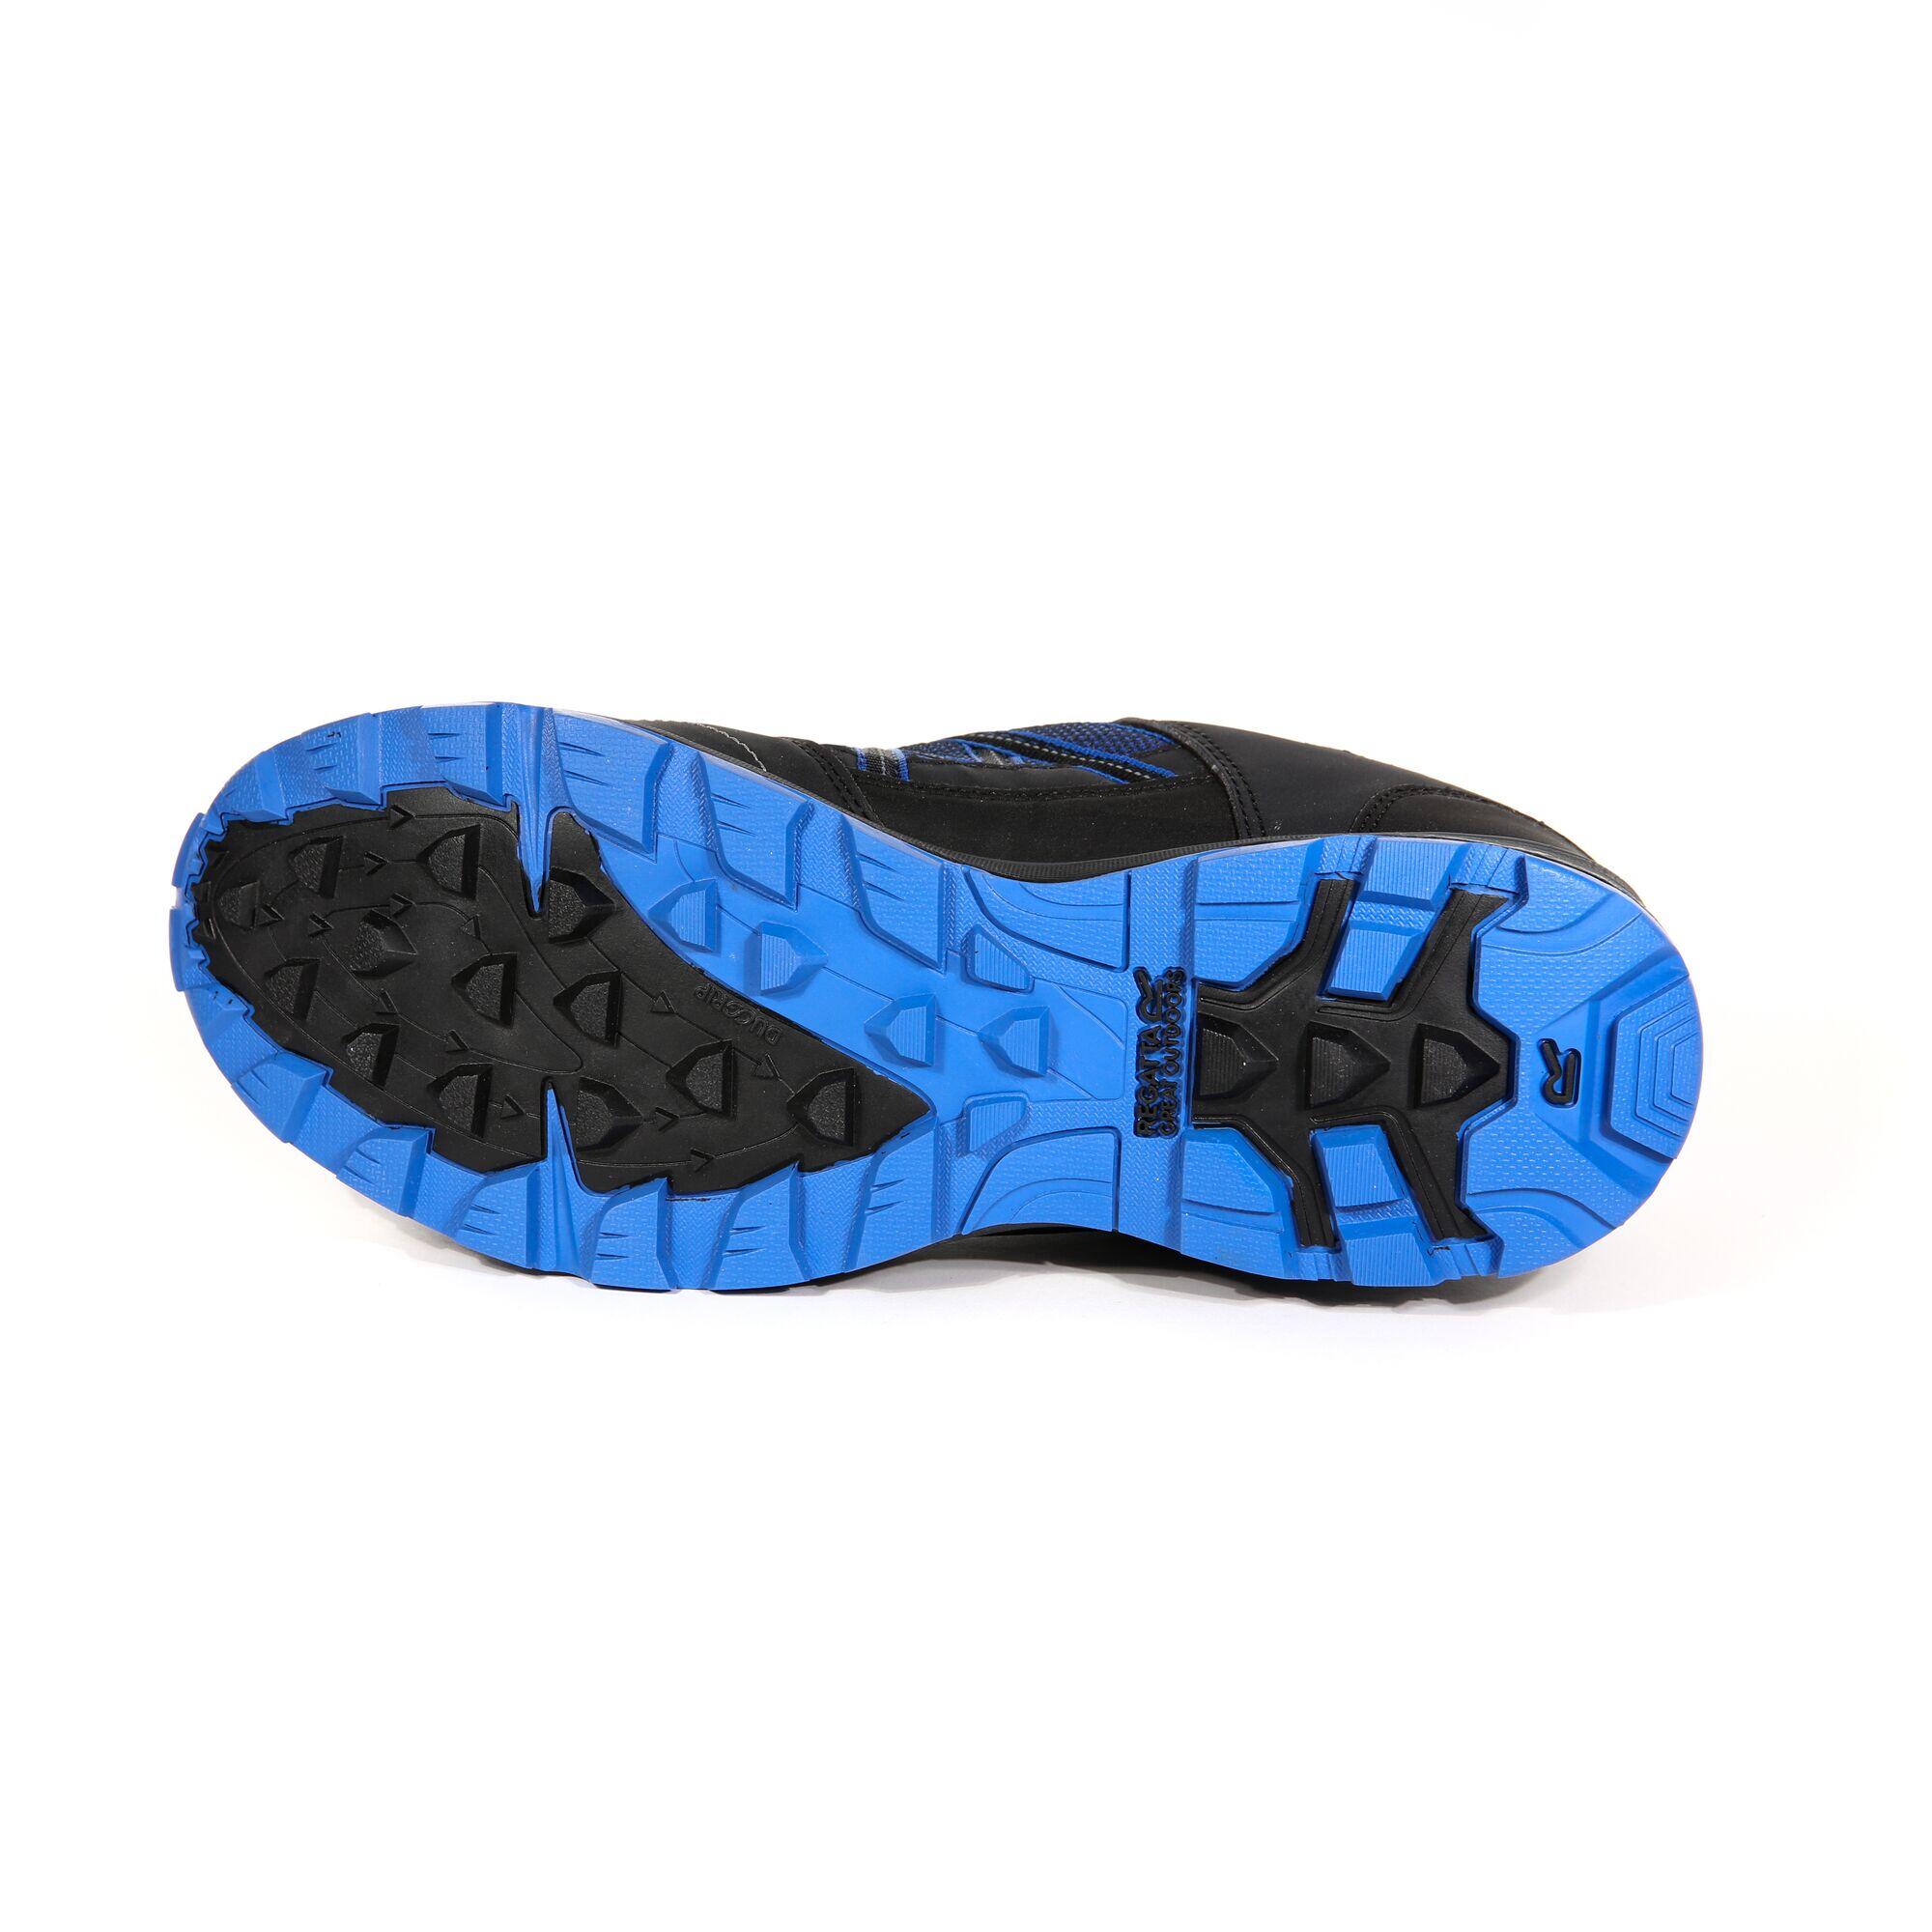 Samaris II Men's Hiking Shoes - Mid Blue/Ash 5/6